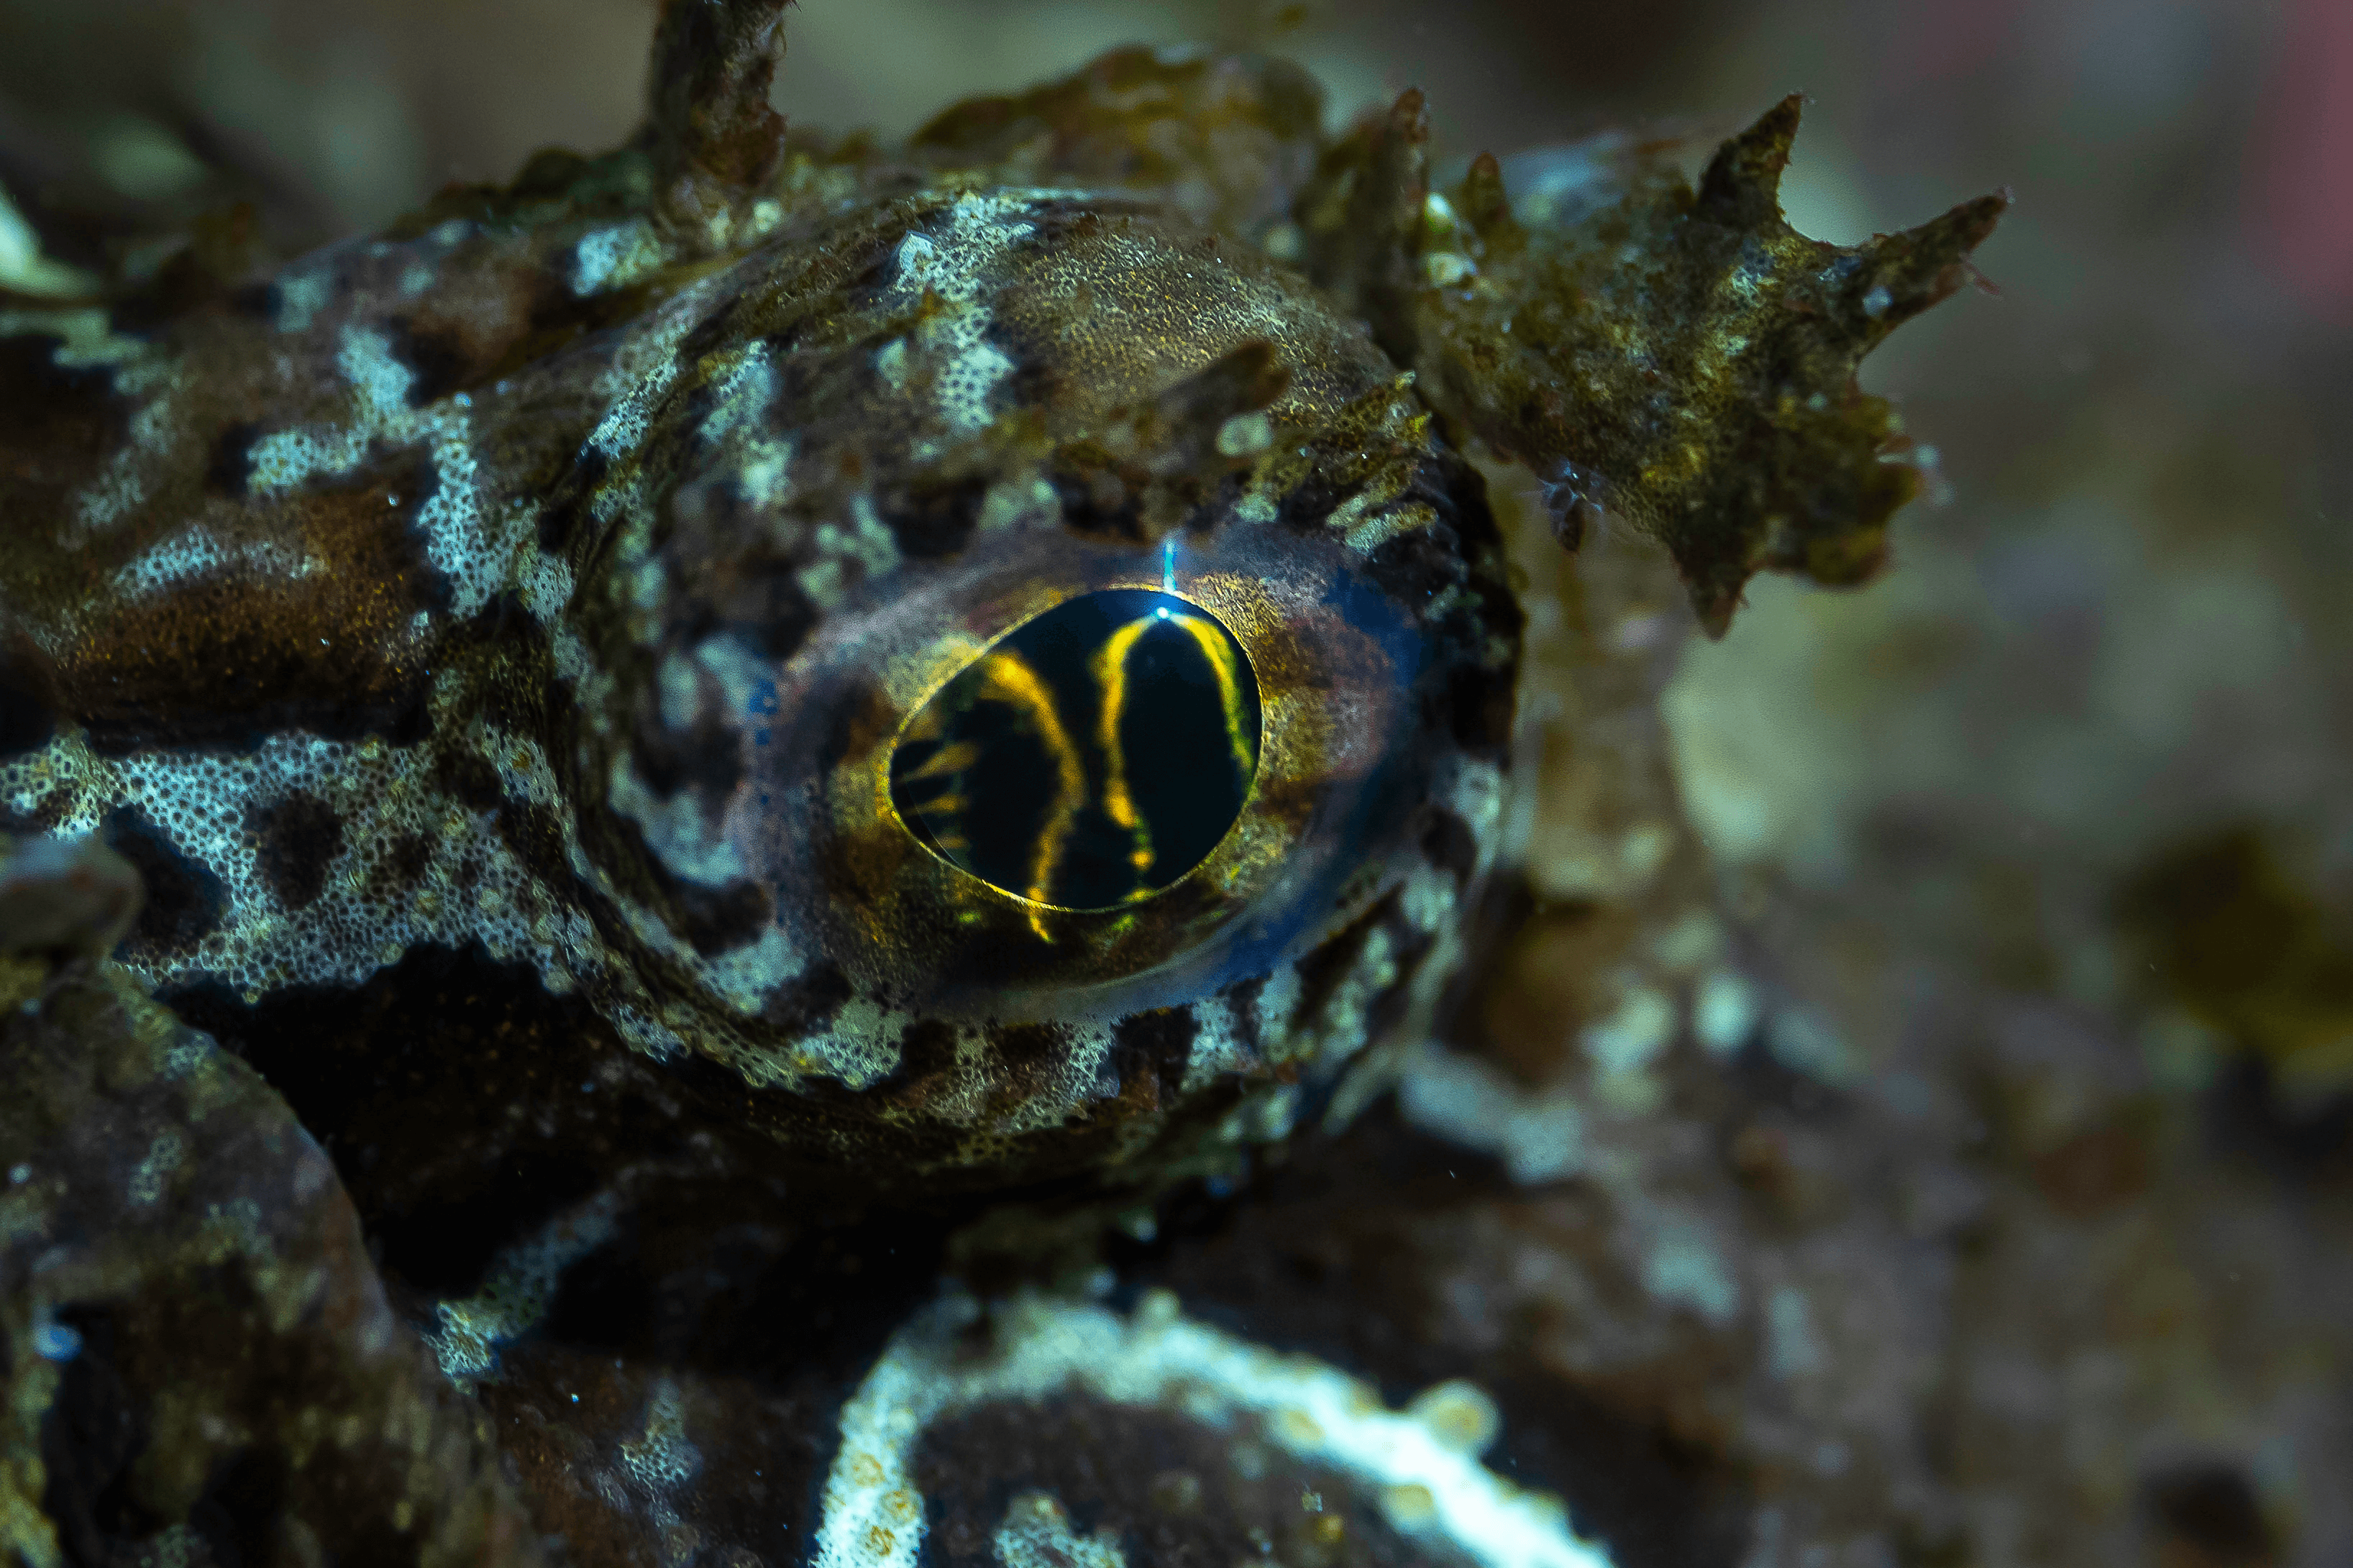 Hemitriptere fish's eye